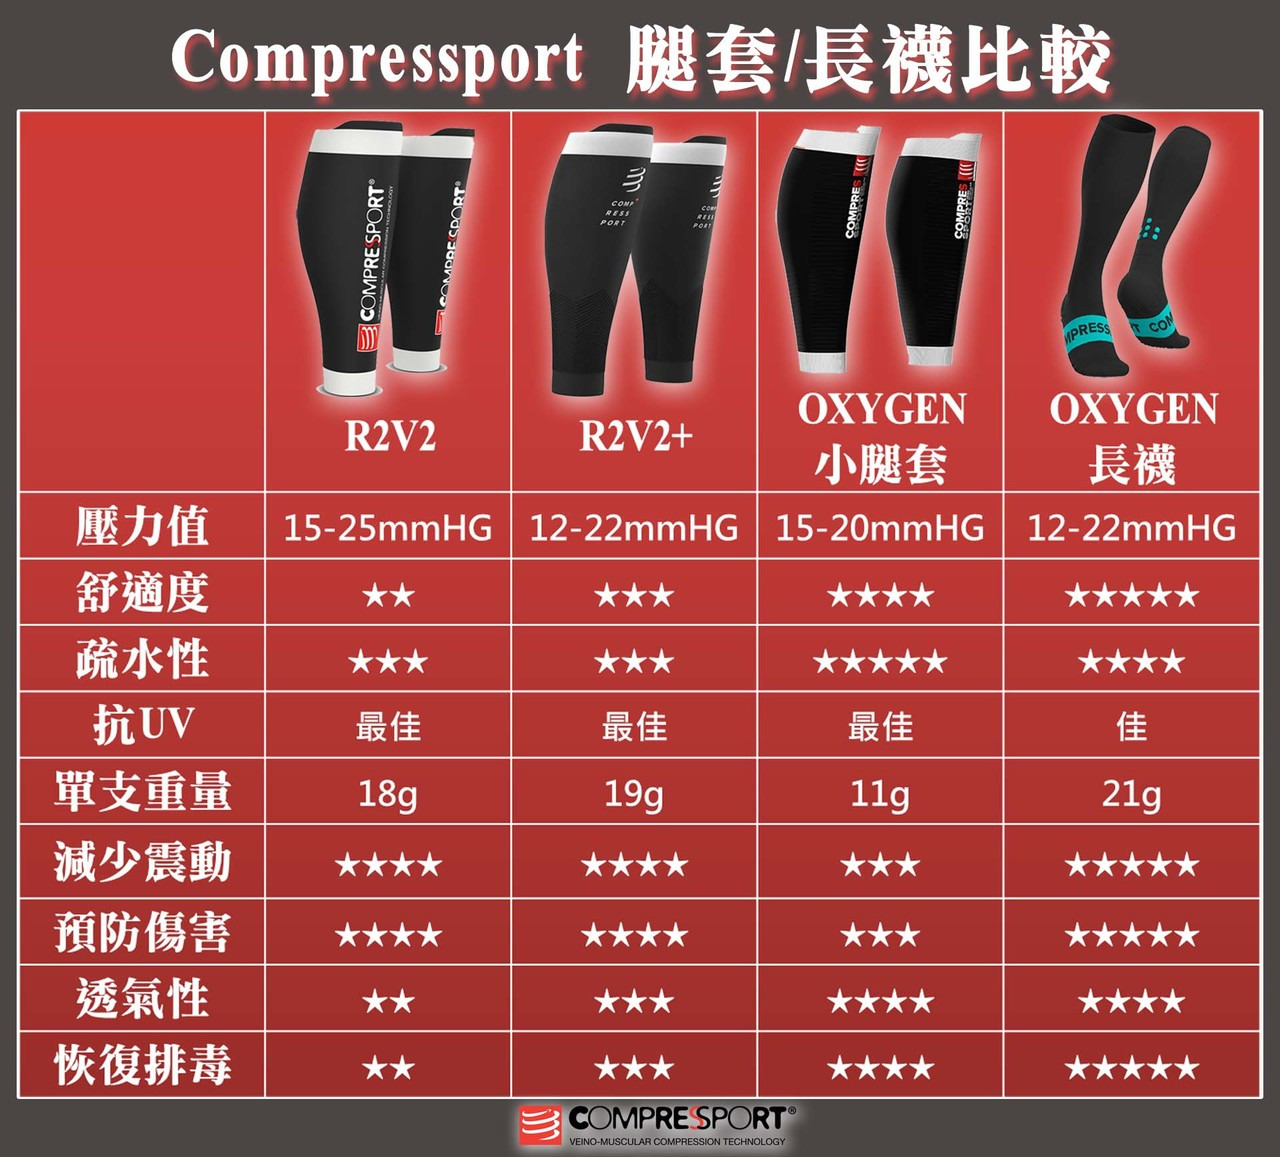 Compressport 小腿套比較說明